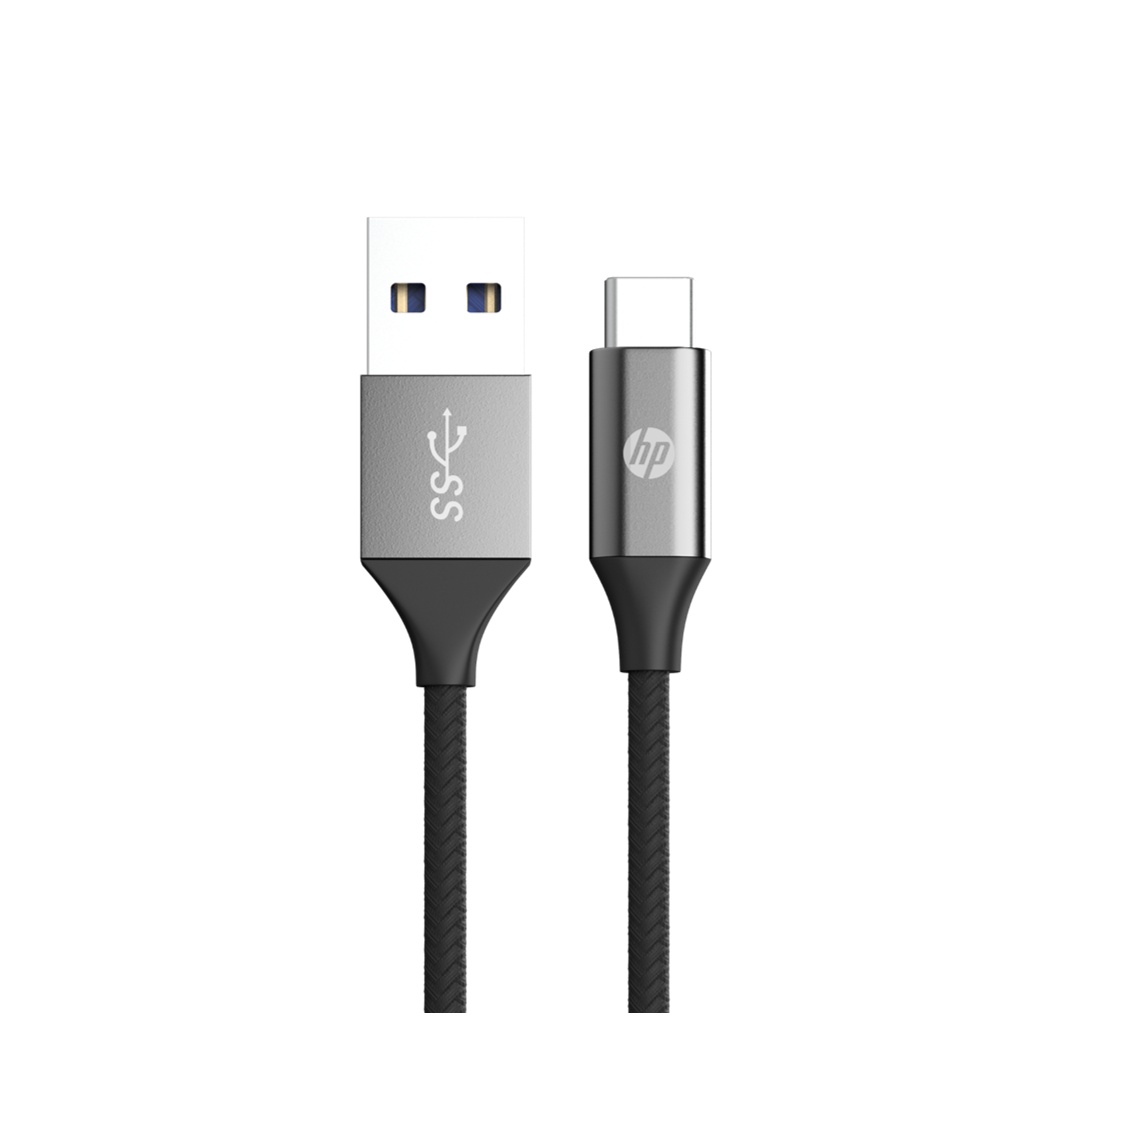 HP惠普USB3.0 A to C金属壳数据线DHC-TC103